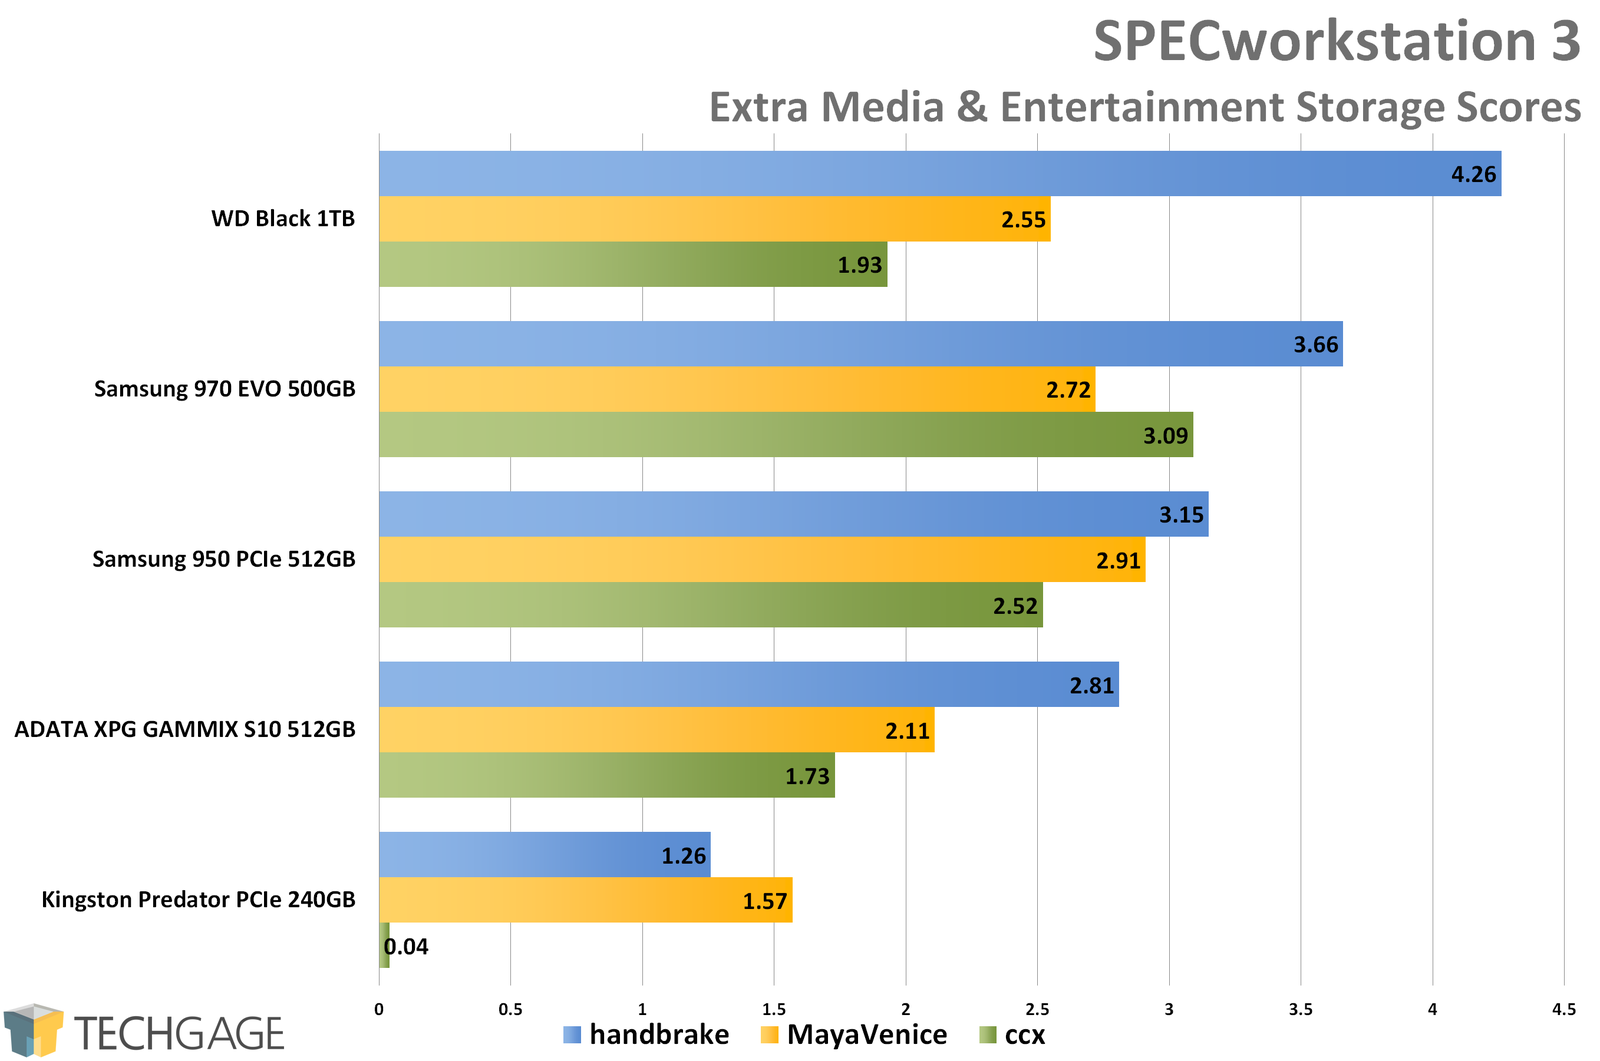 SPECworkstation 3 - Media and Entertainment Storage Scores (Extra)